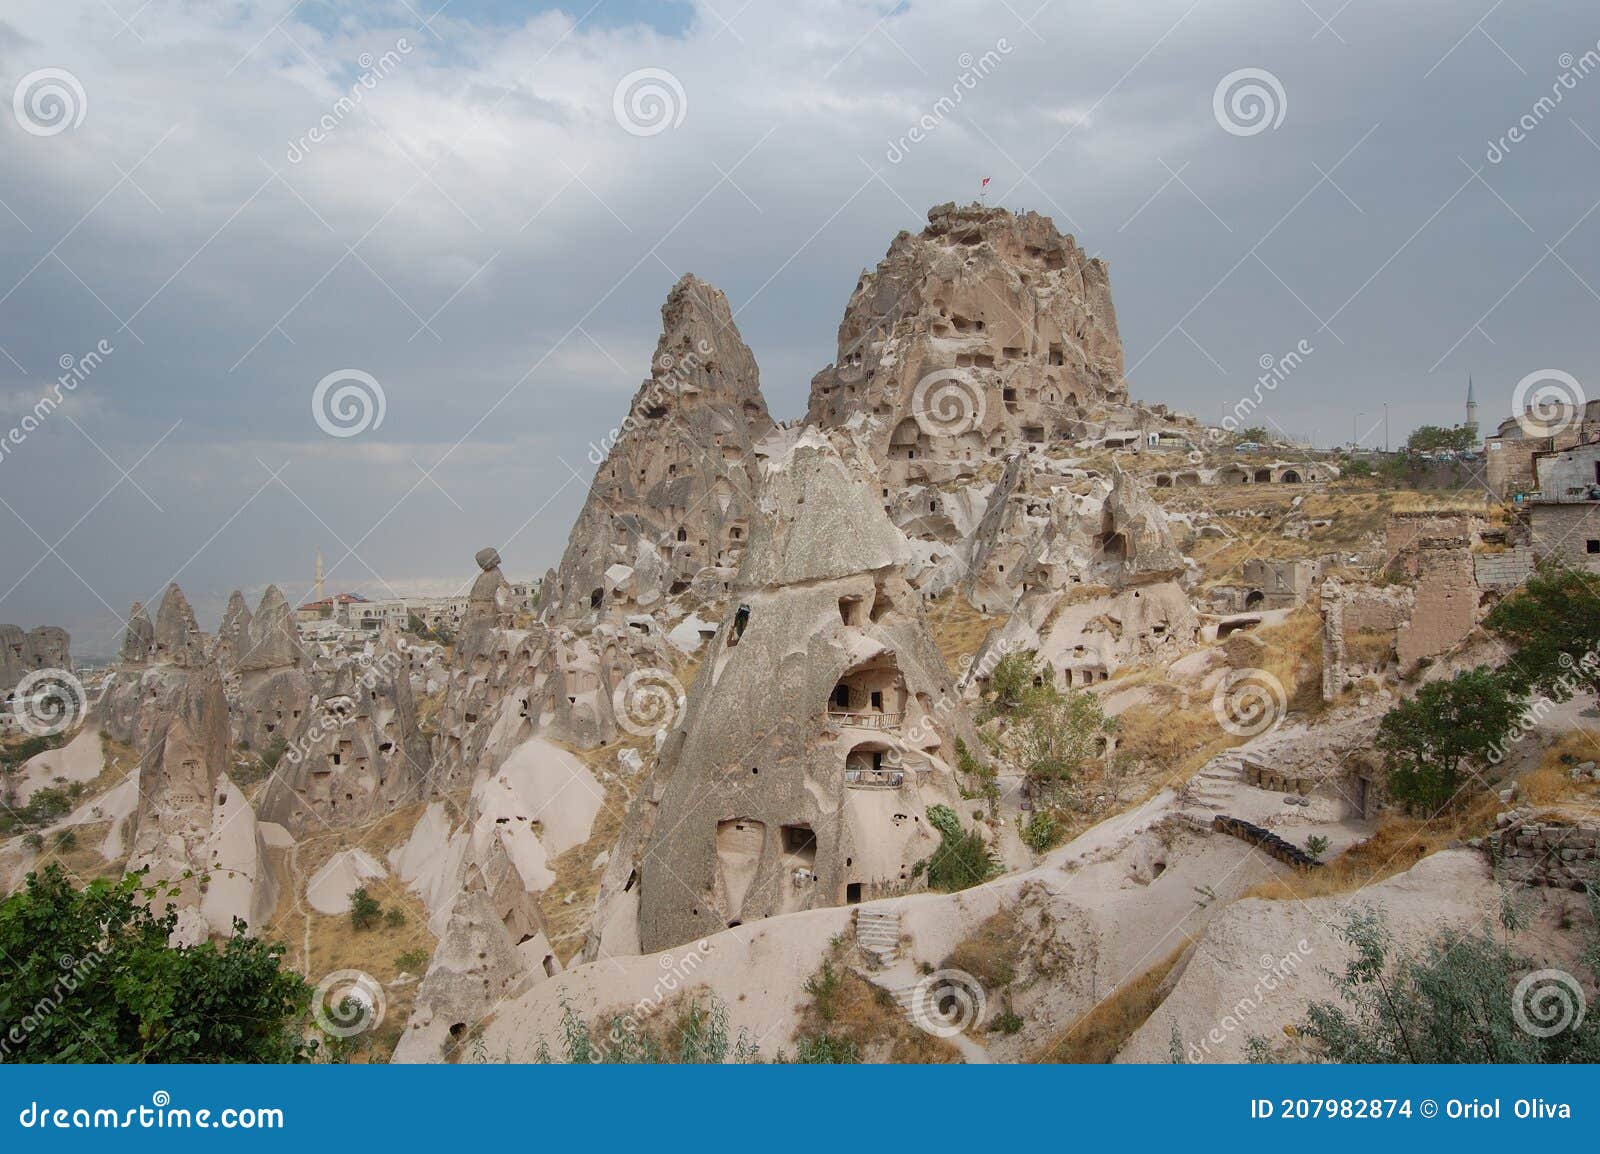 troglodyte village of uchisar (cappadocia turkey). central anatolia.